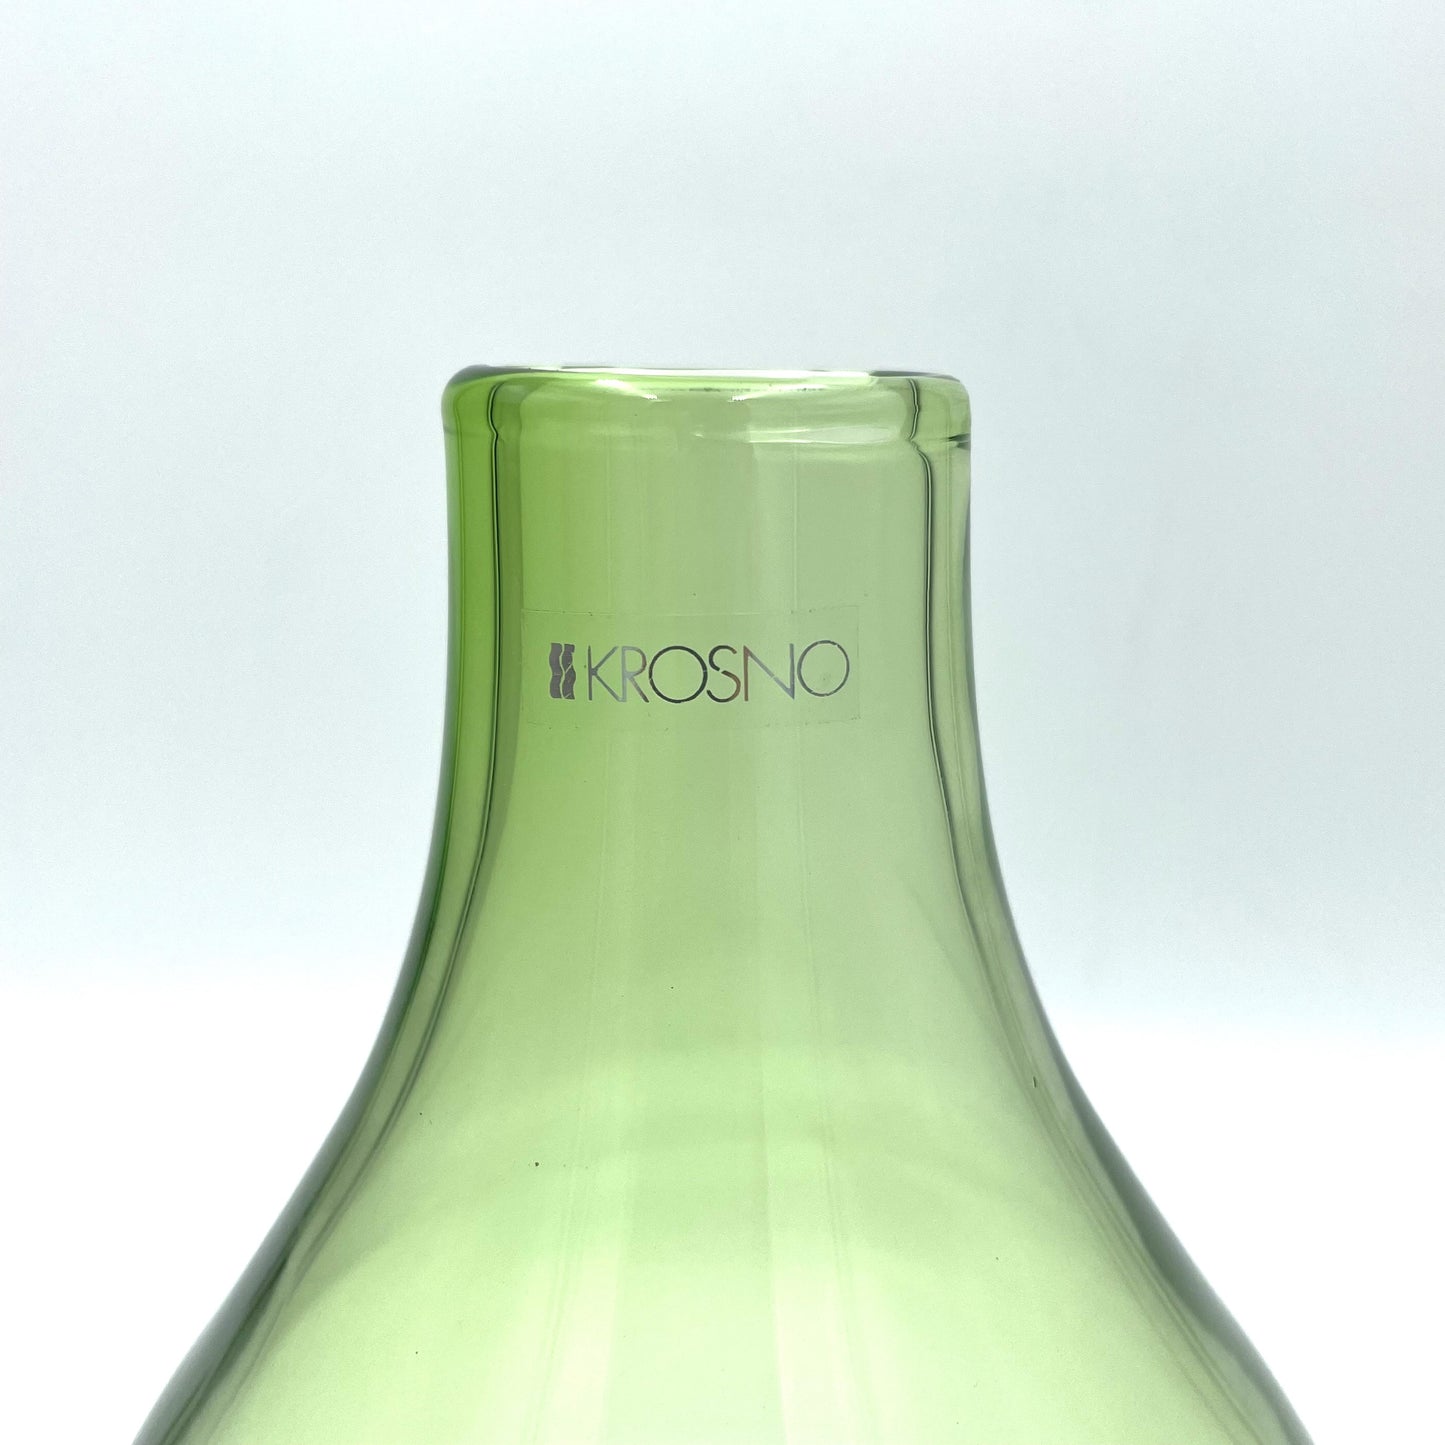 Krosno Poland Green Art Glass Vase - 19cm